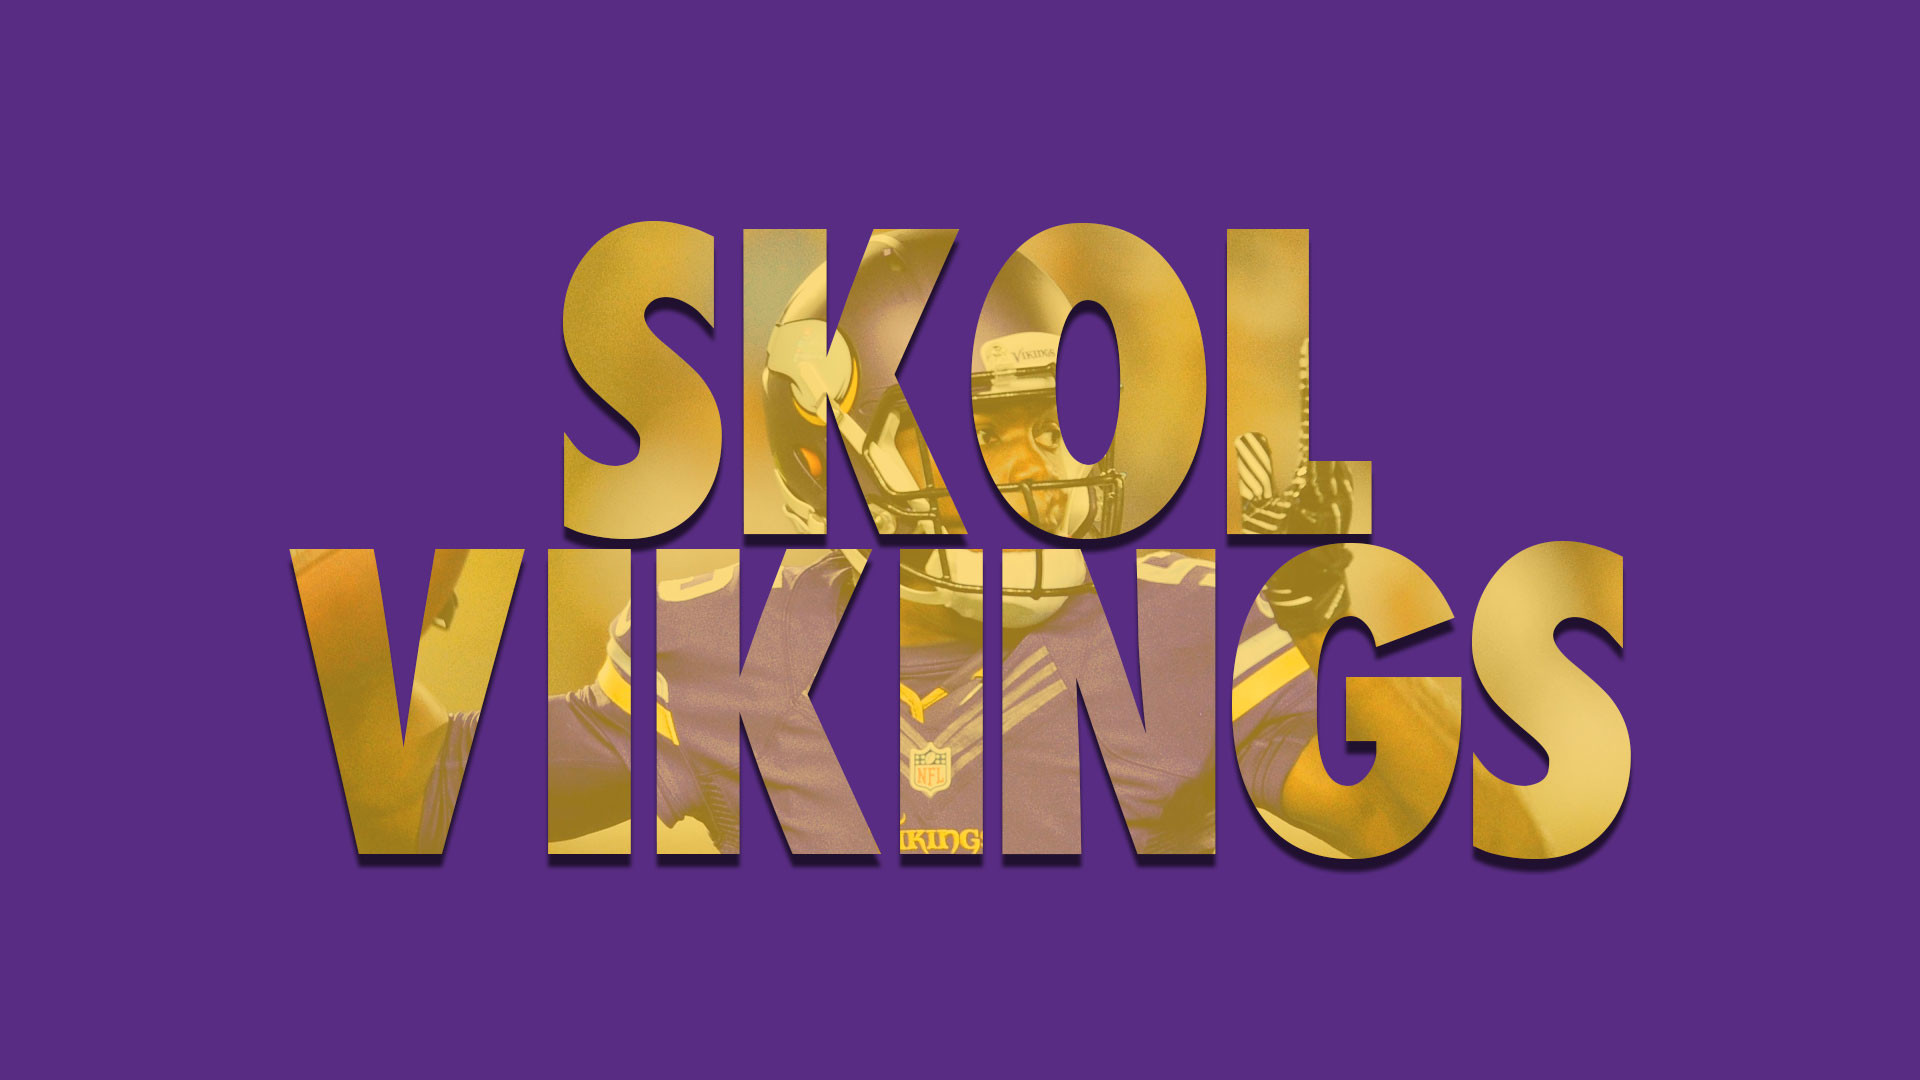 Minnesota Vikings Phone Wallpaper Image